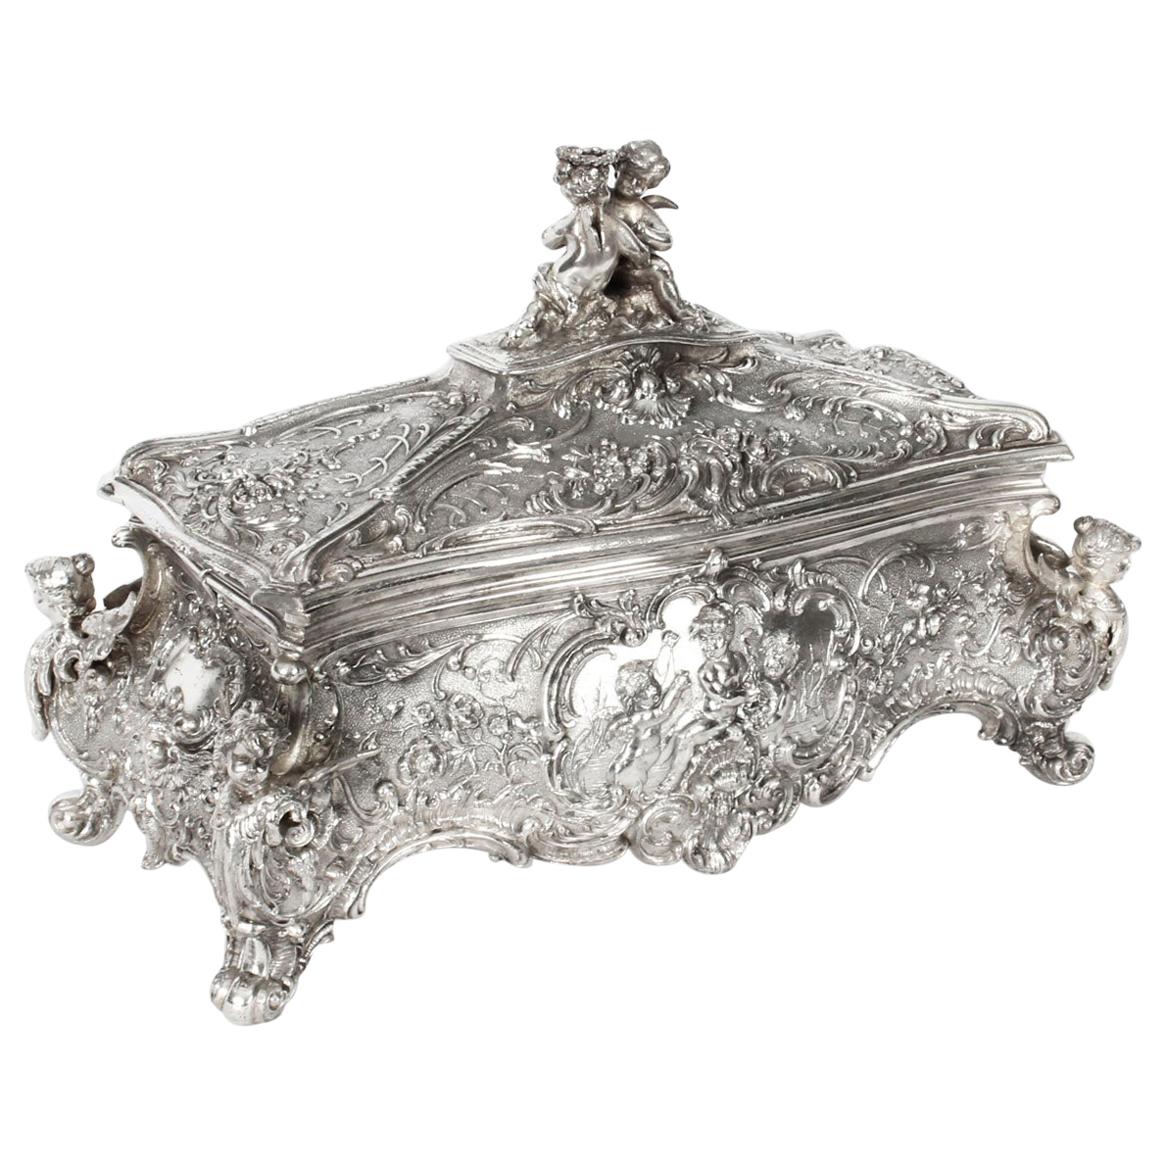 19th Century German WMF Silver Plated Casket / Jewelry Box